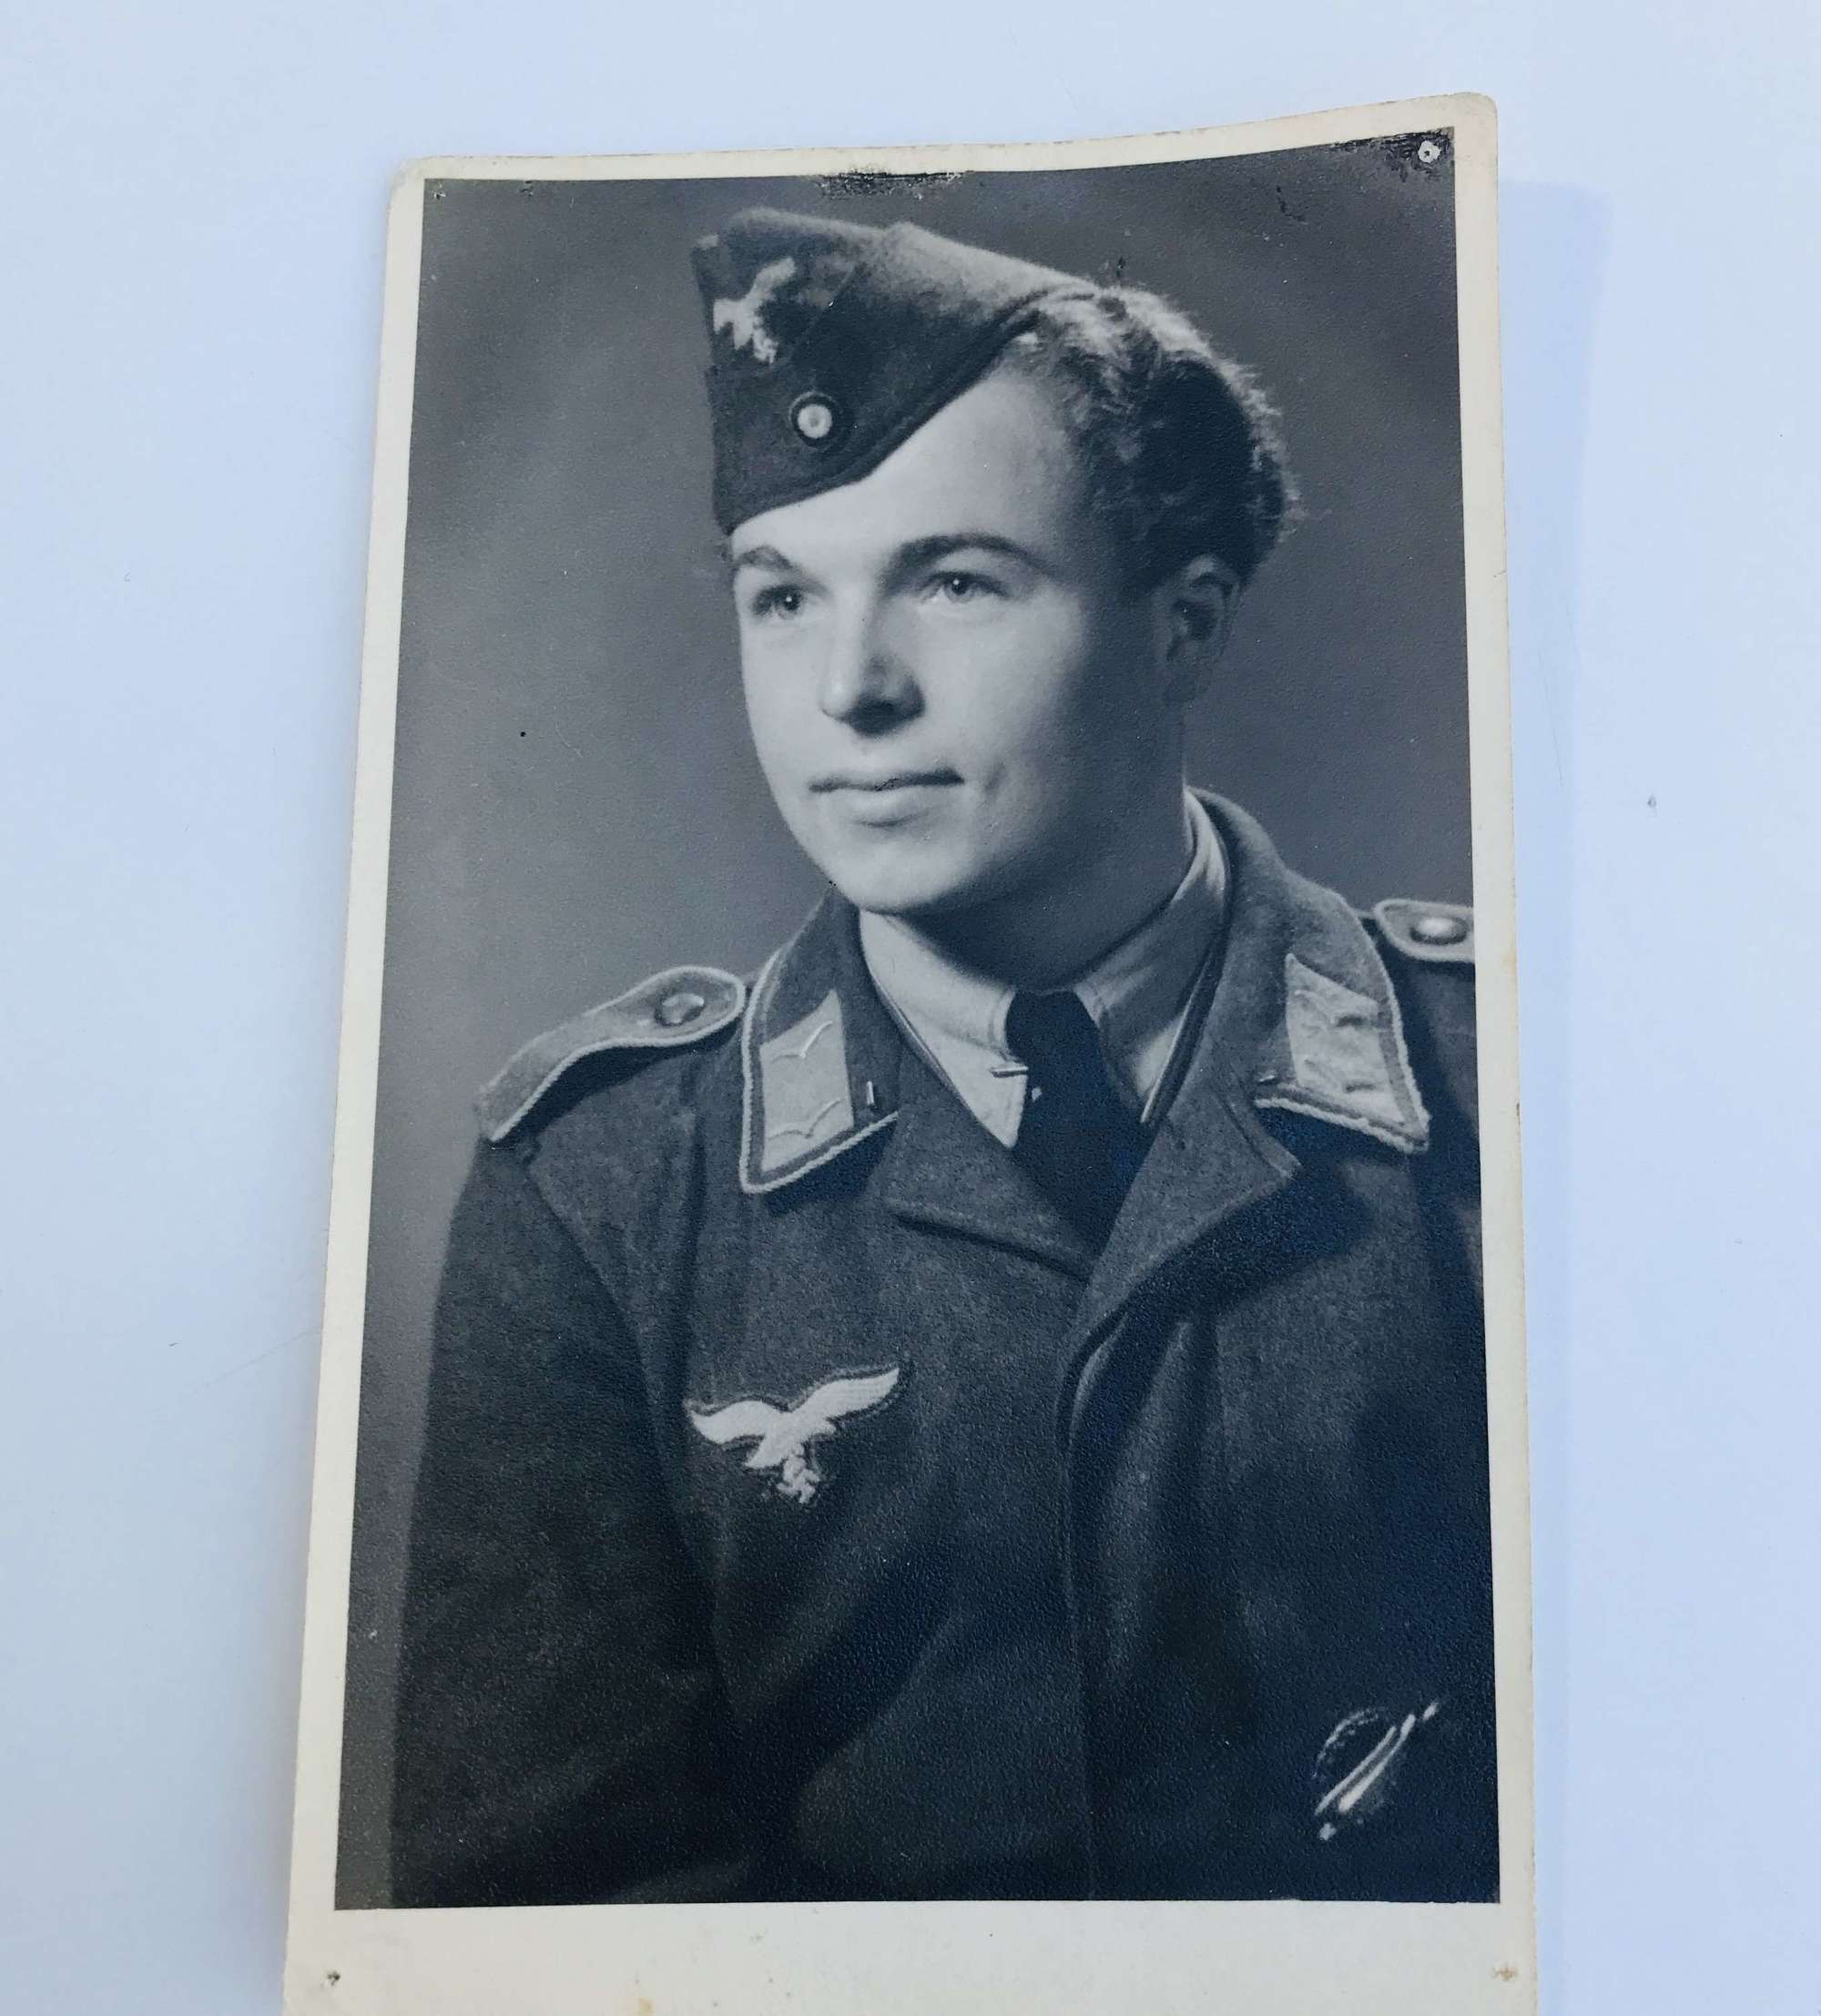 Portrait image of Fallschirmjager Wearing a forage  cap